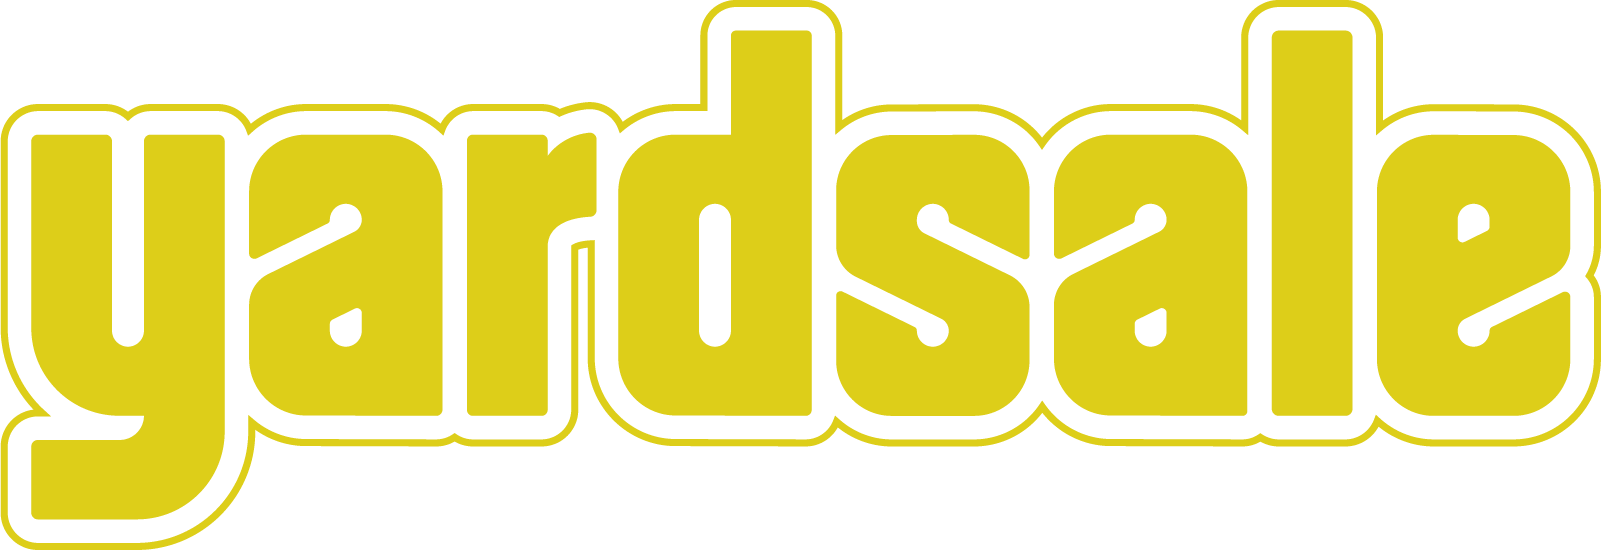 Yardsale Logo Outline Yellow